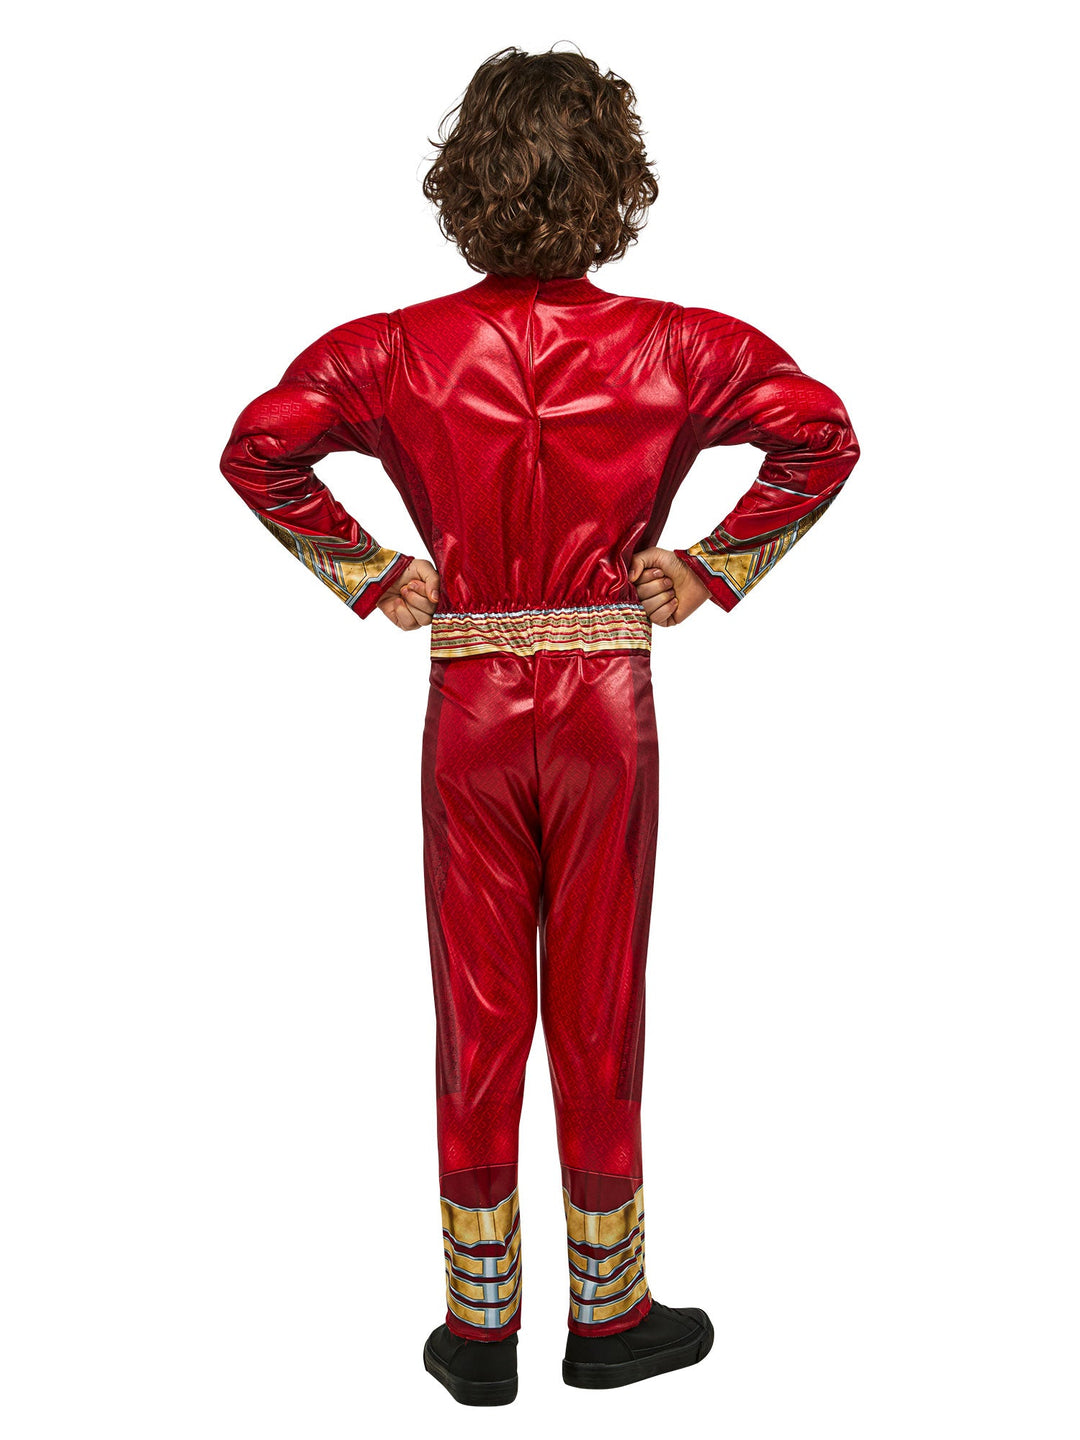 Shazam Fury of the Gods Boys Red Muscle Costume_3